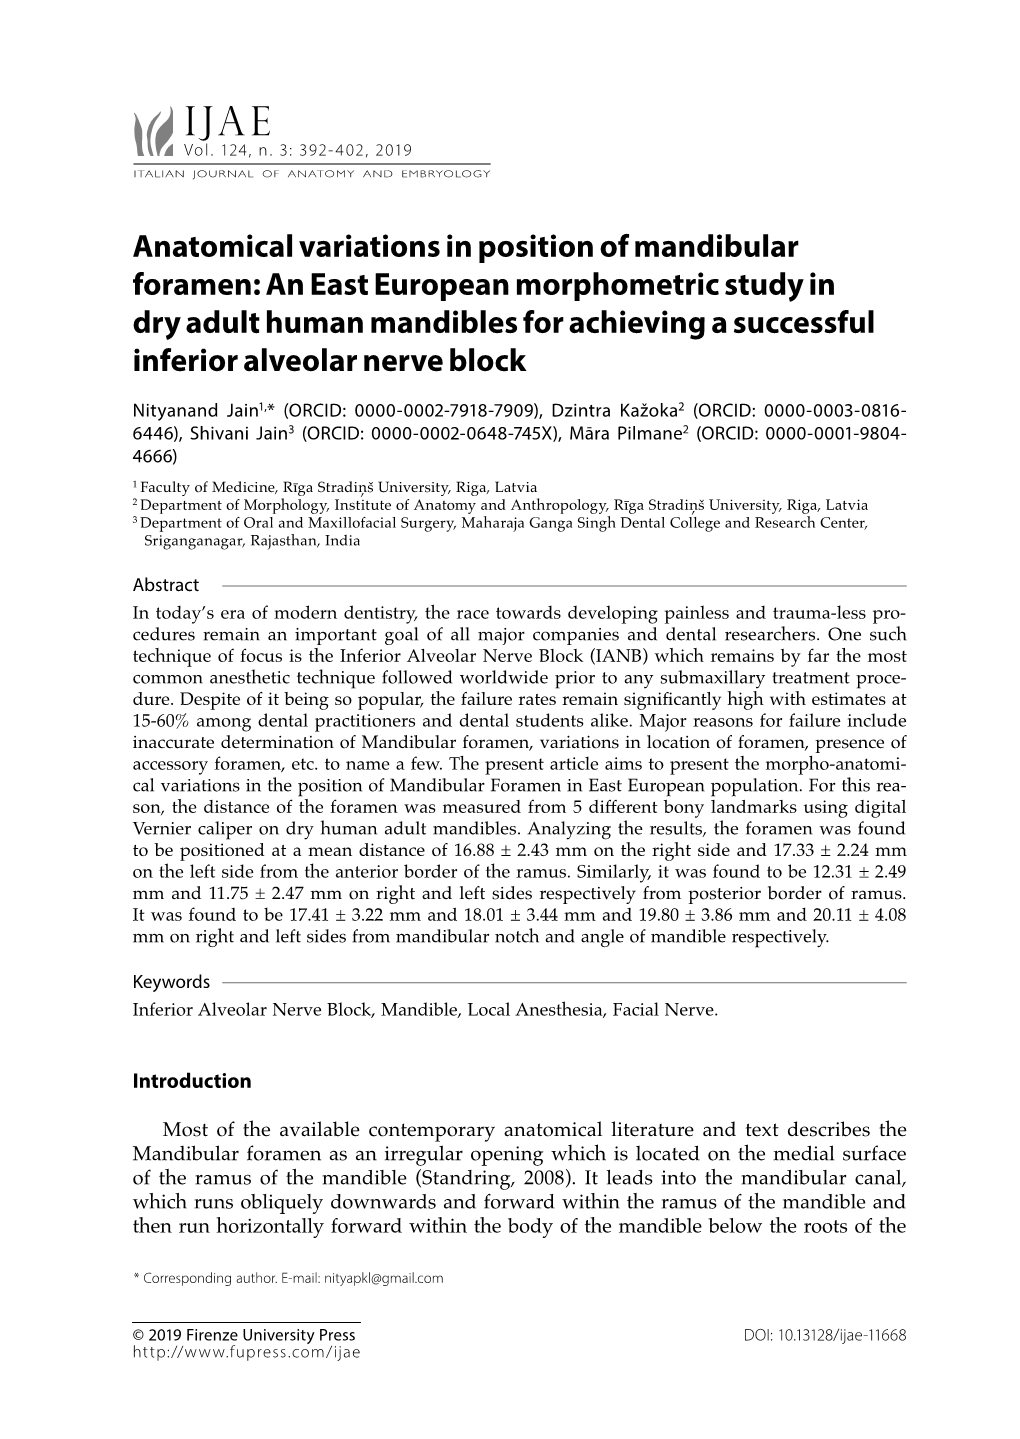 Anatomical Variations in Position of Mandibular Foramen